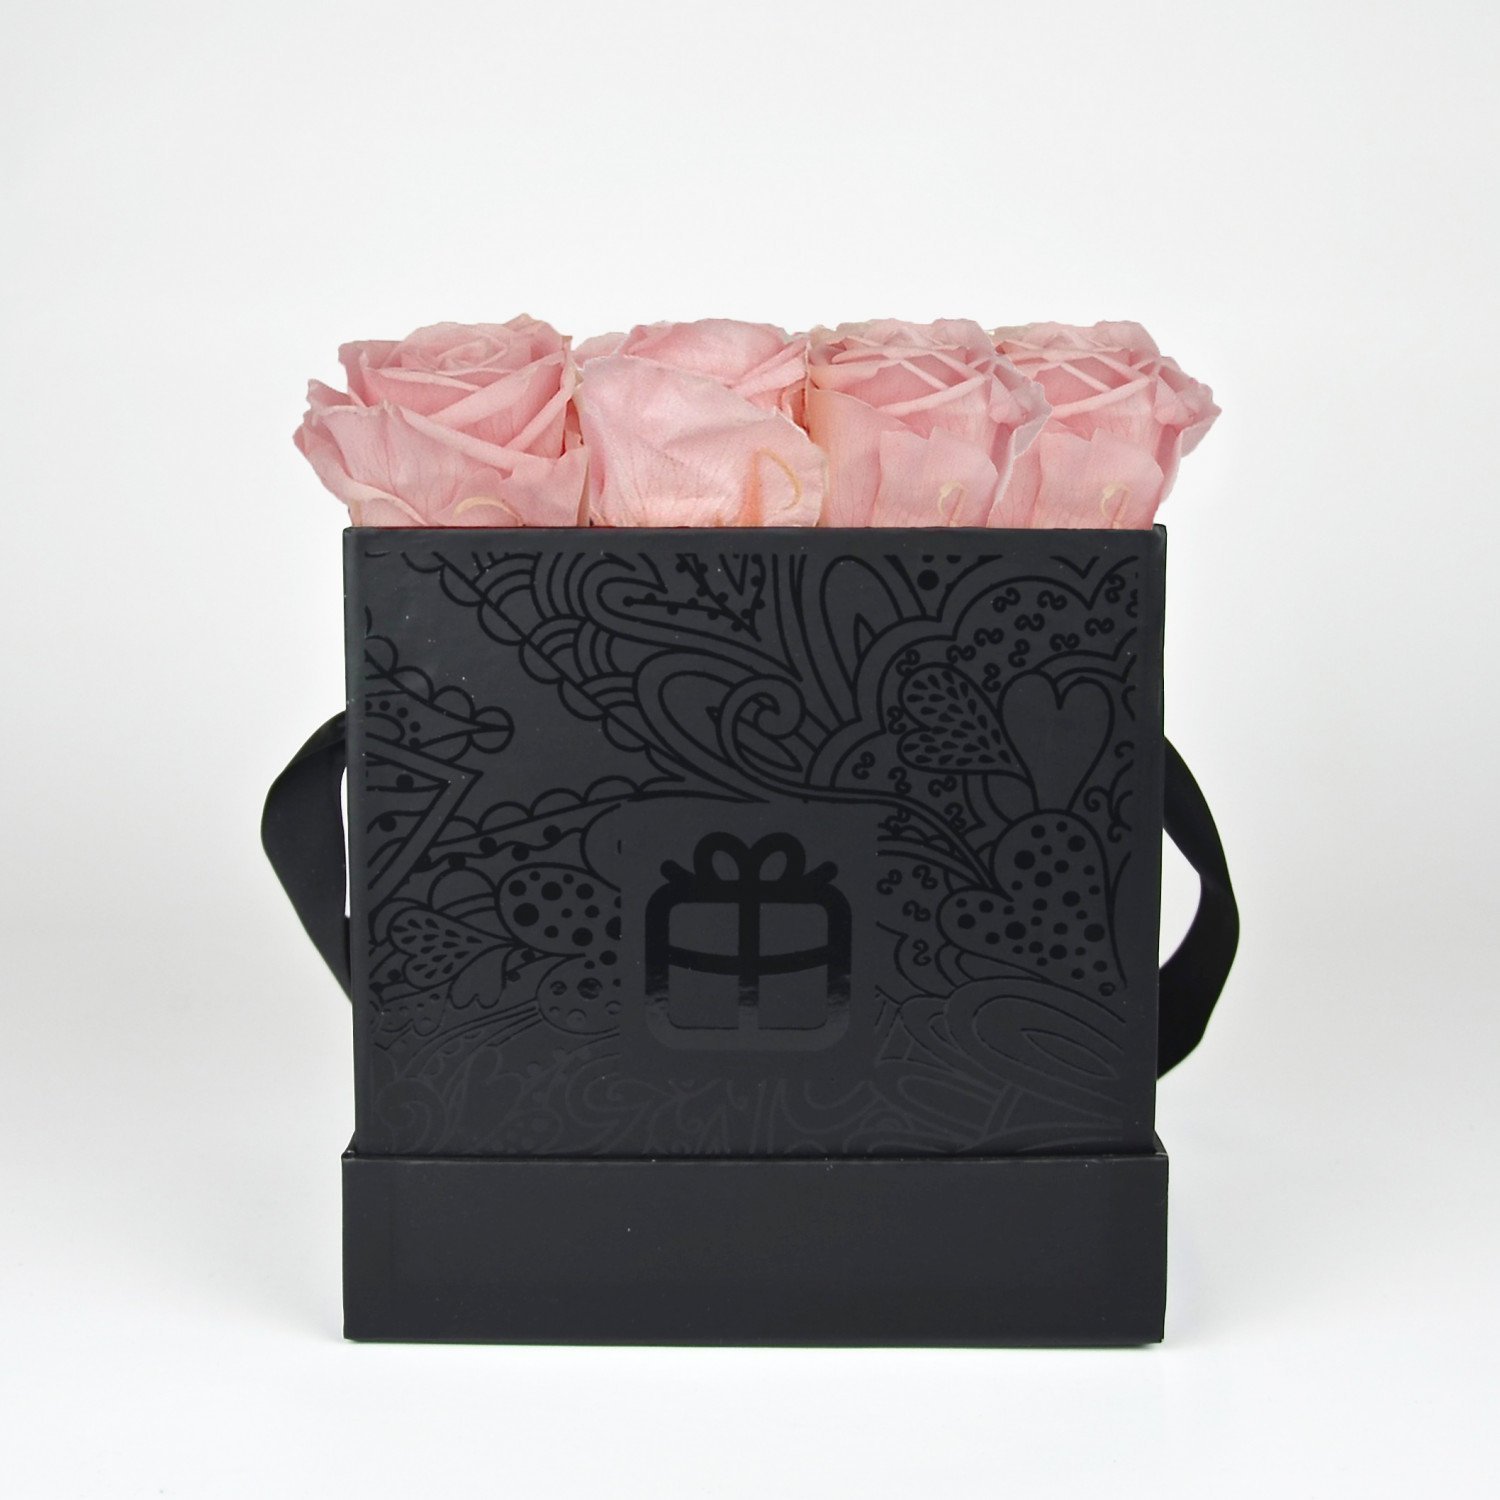 Flowerbox: Infinity Rosen